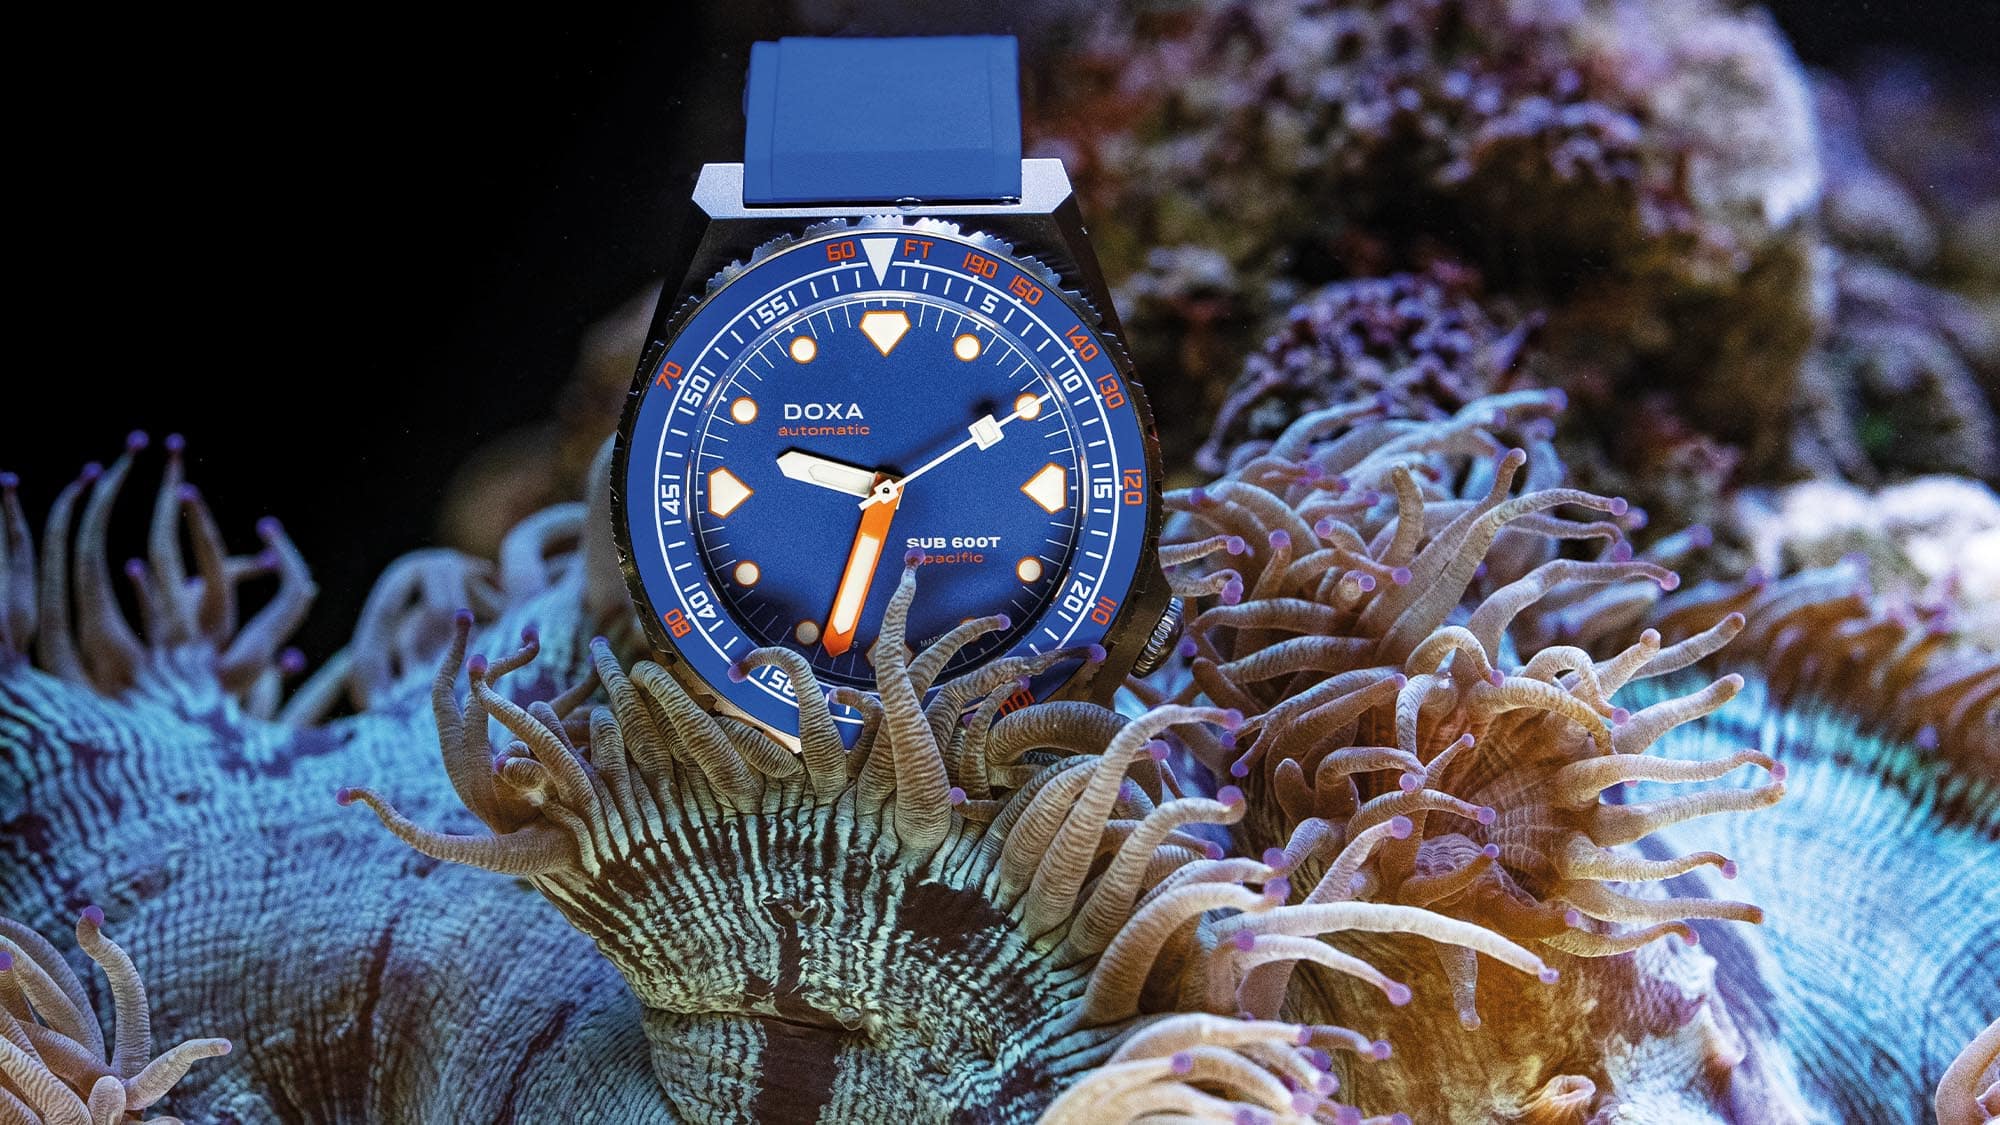 Doxa watch underwater